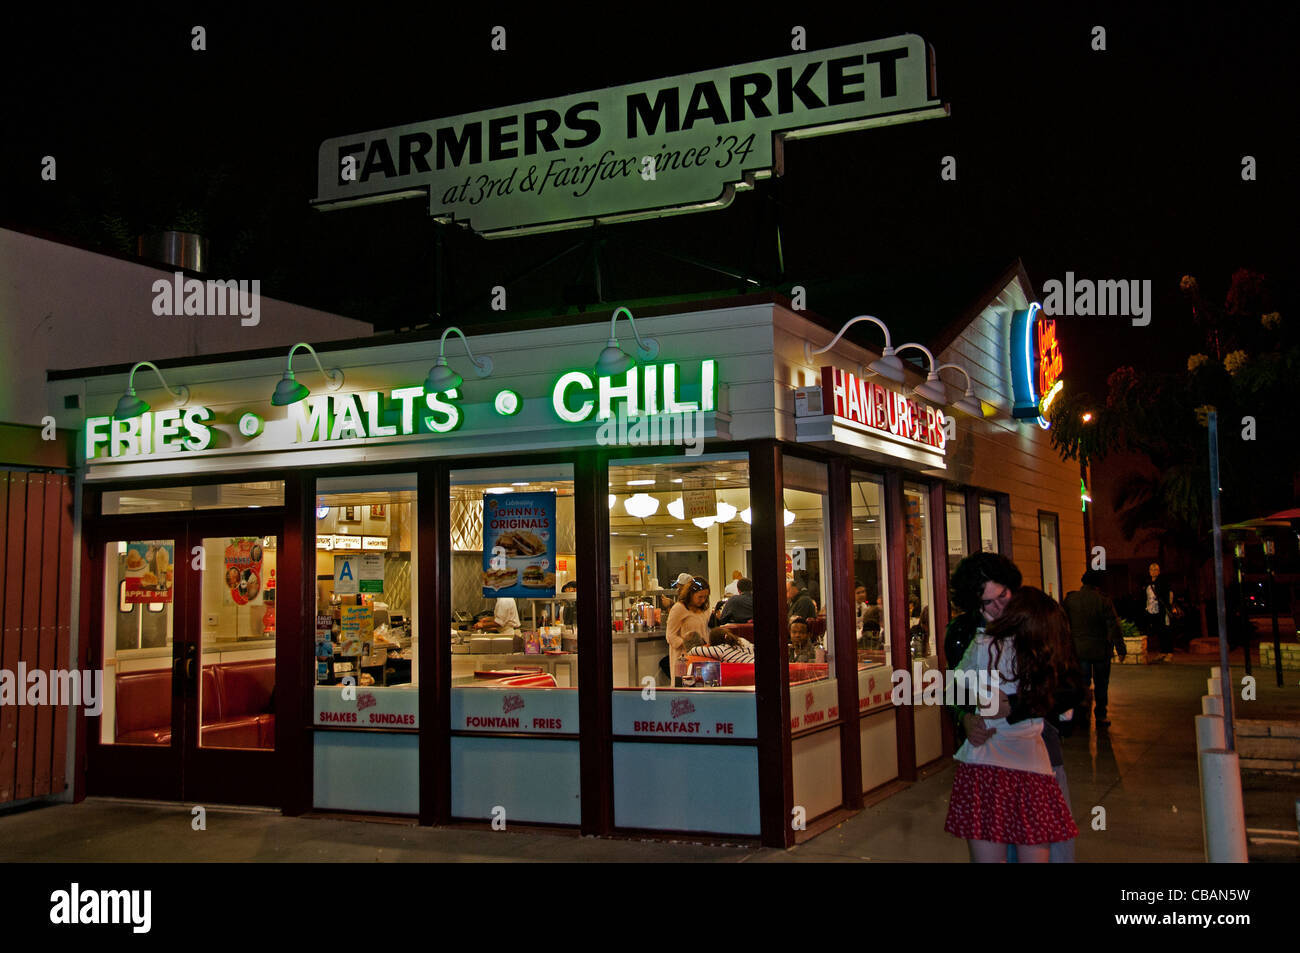 The Grove Farmers Market Retail Entertainment Shopping Mall Los Angeles California United StatesV Stockfoto